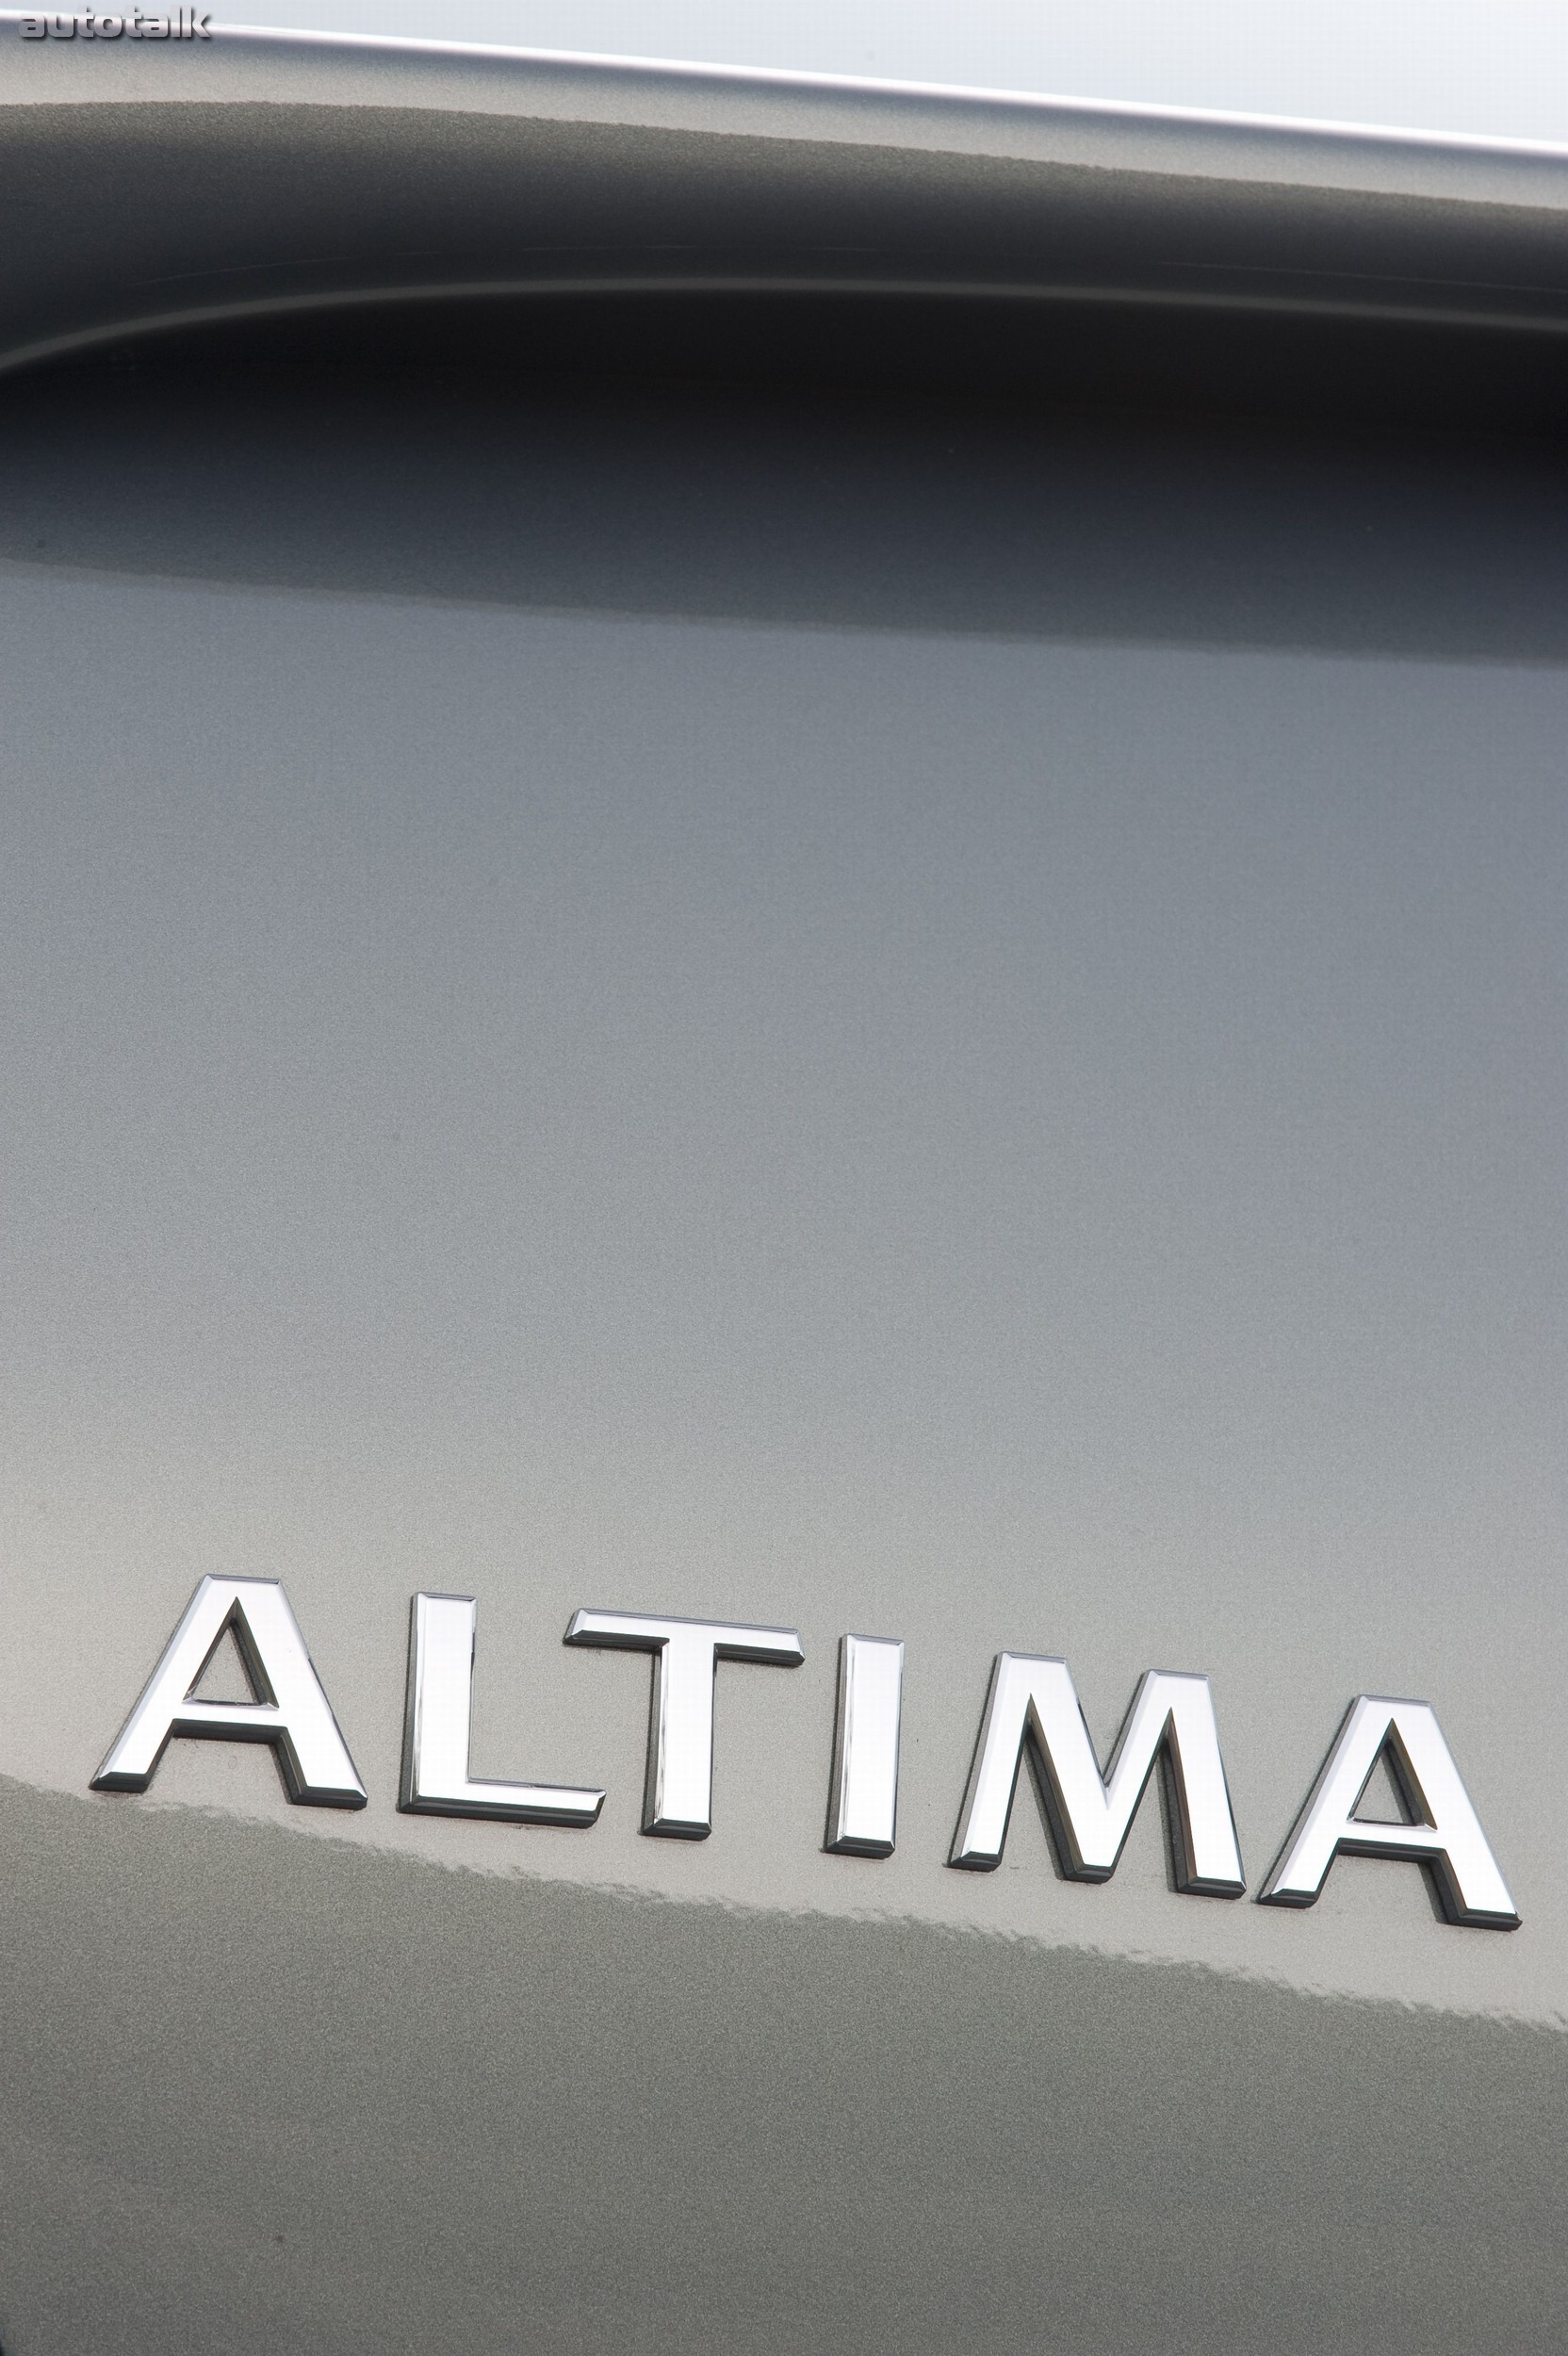 2010 Nissan Altima Hybrid